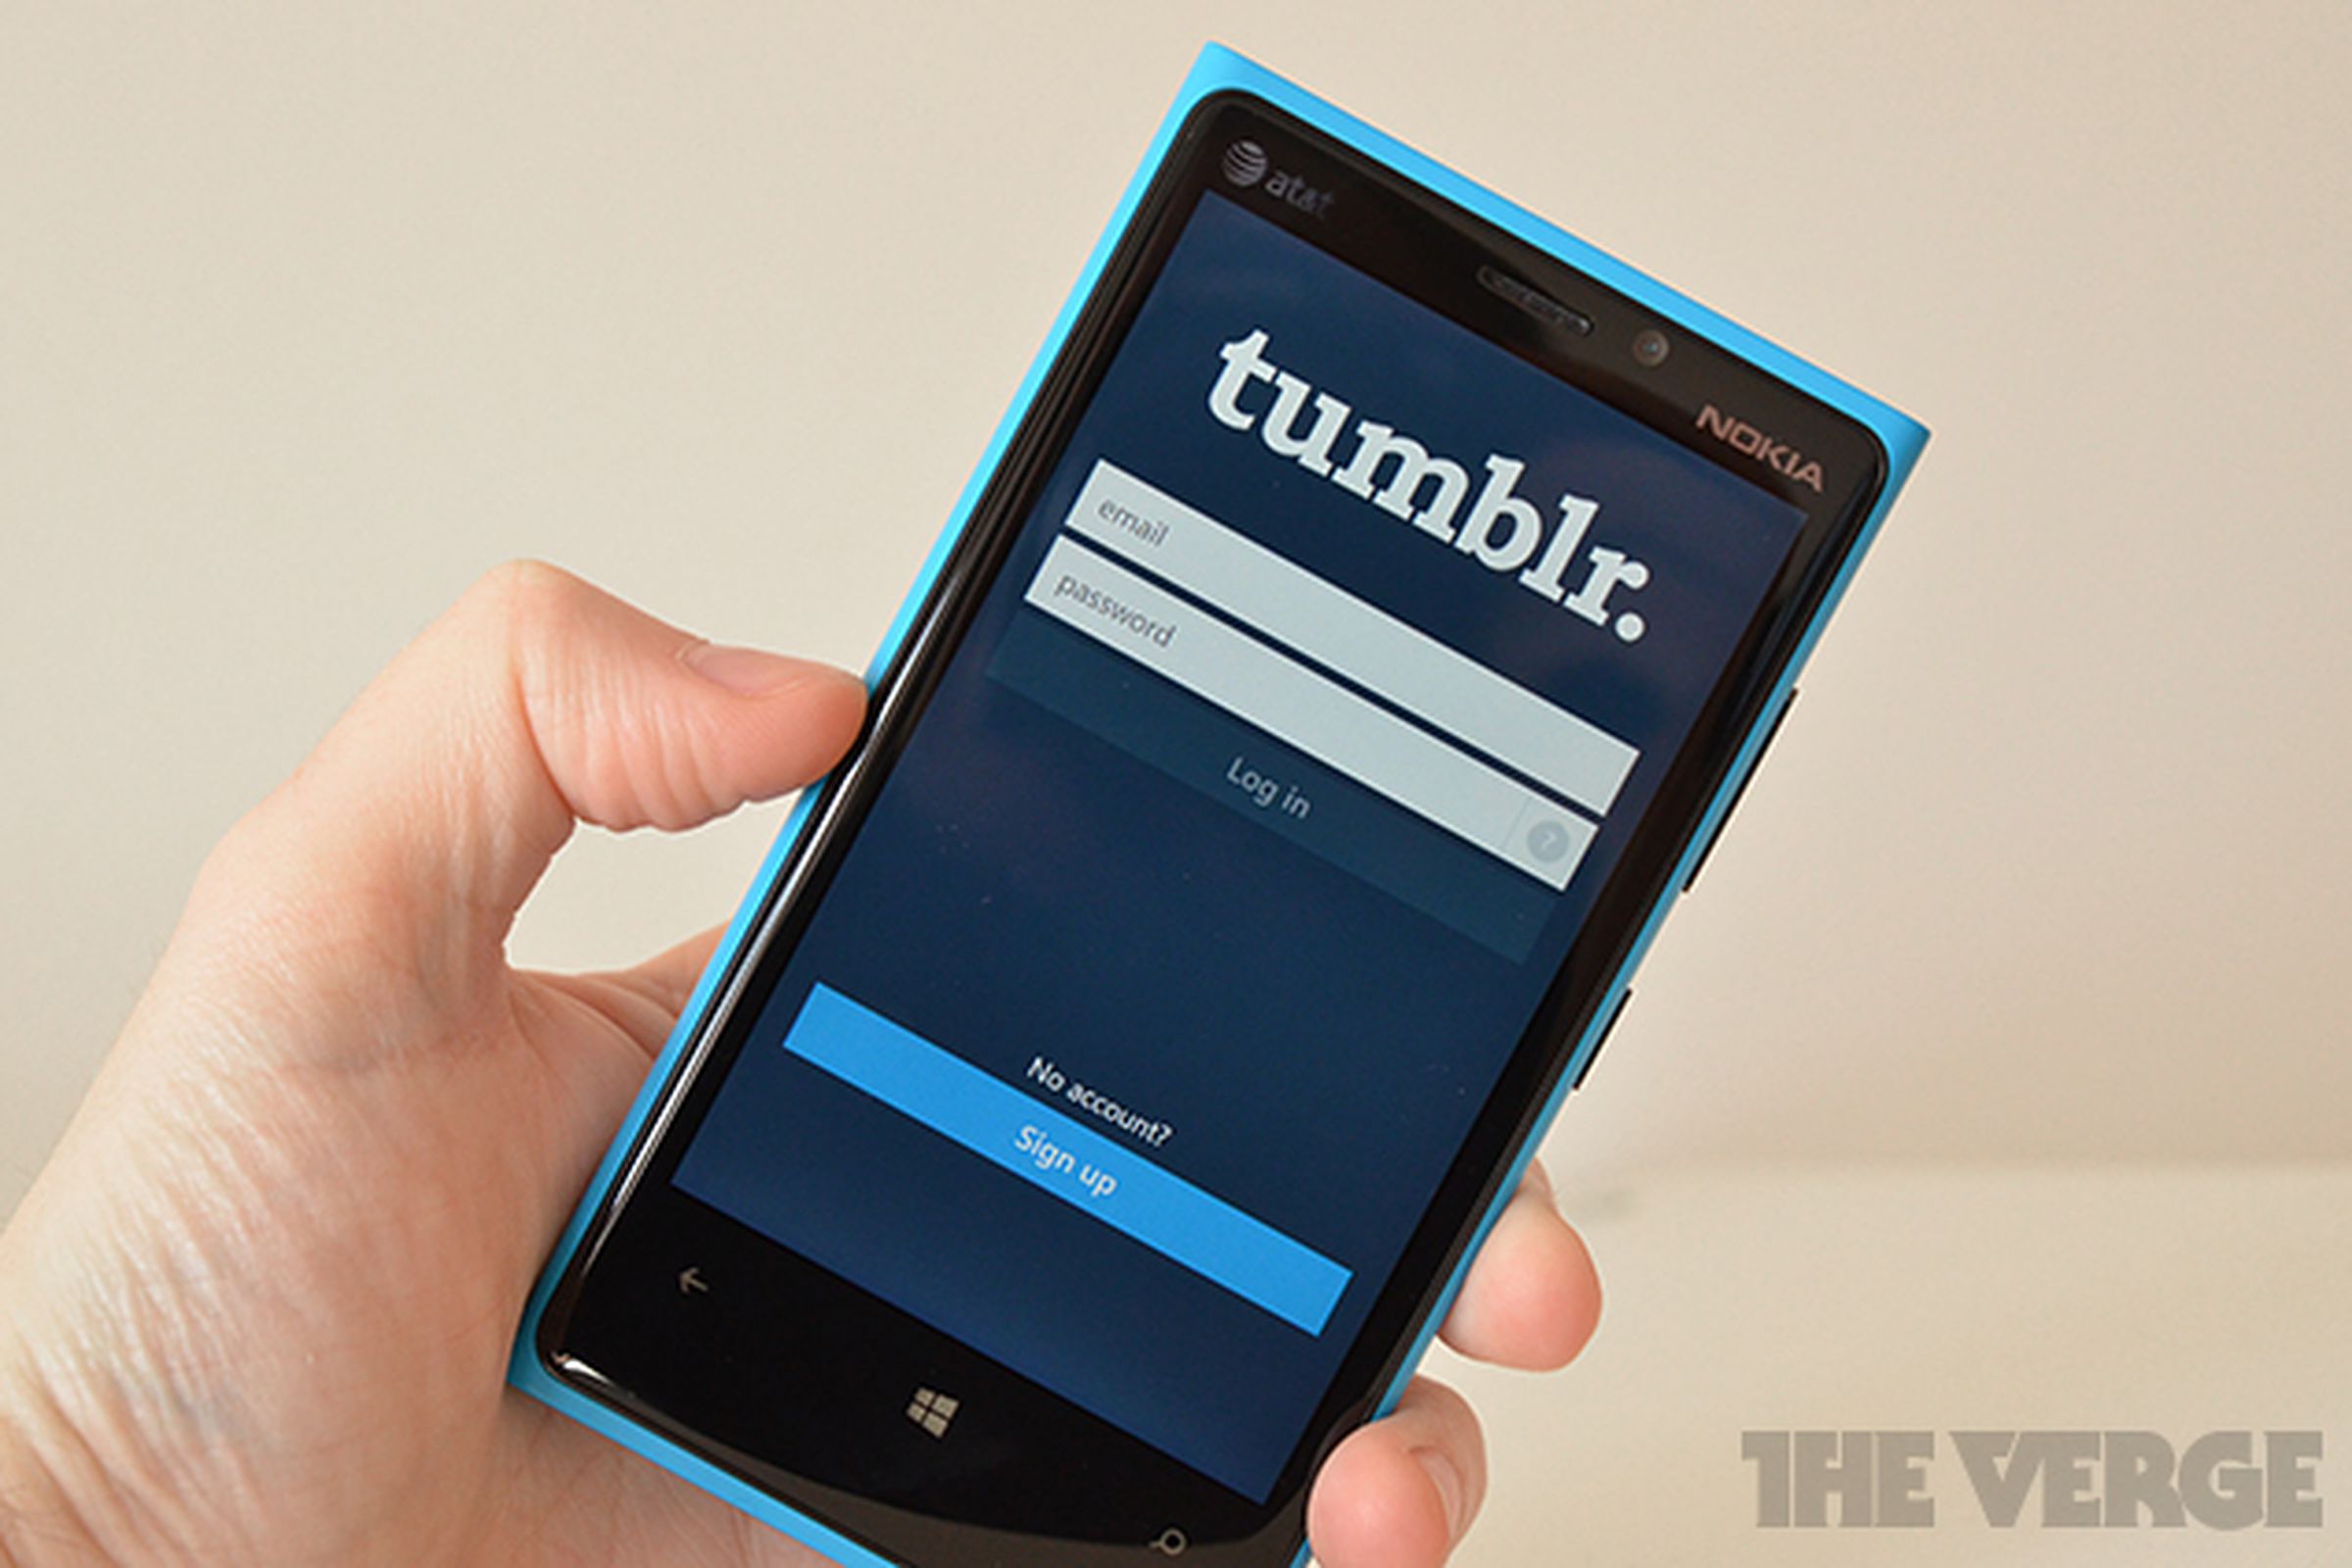 Tumblr Windows Phone